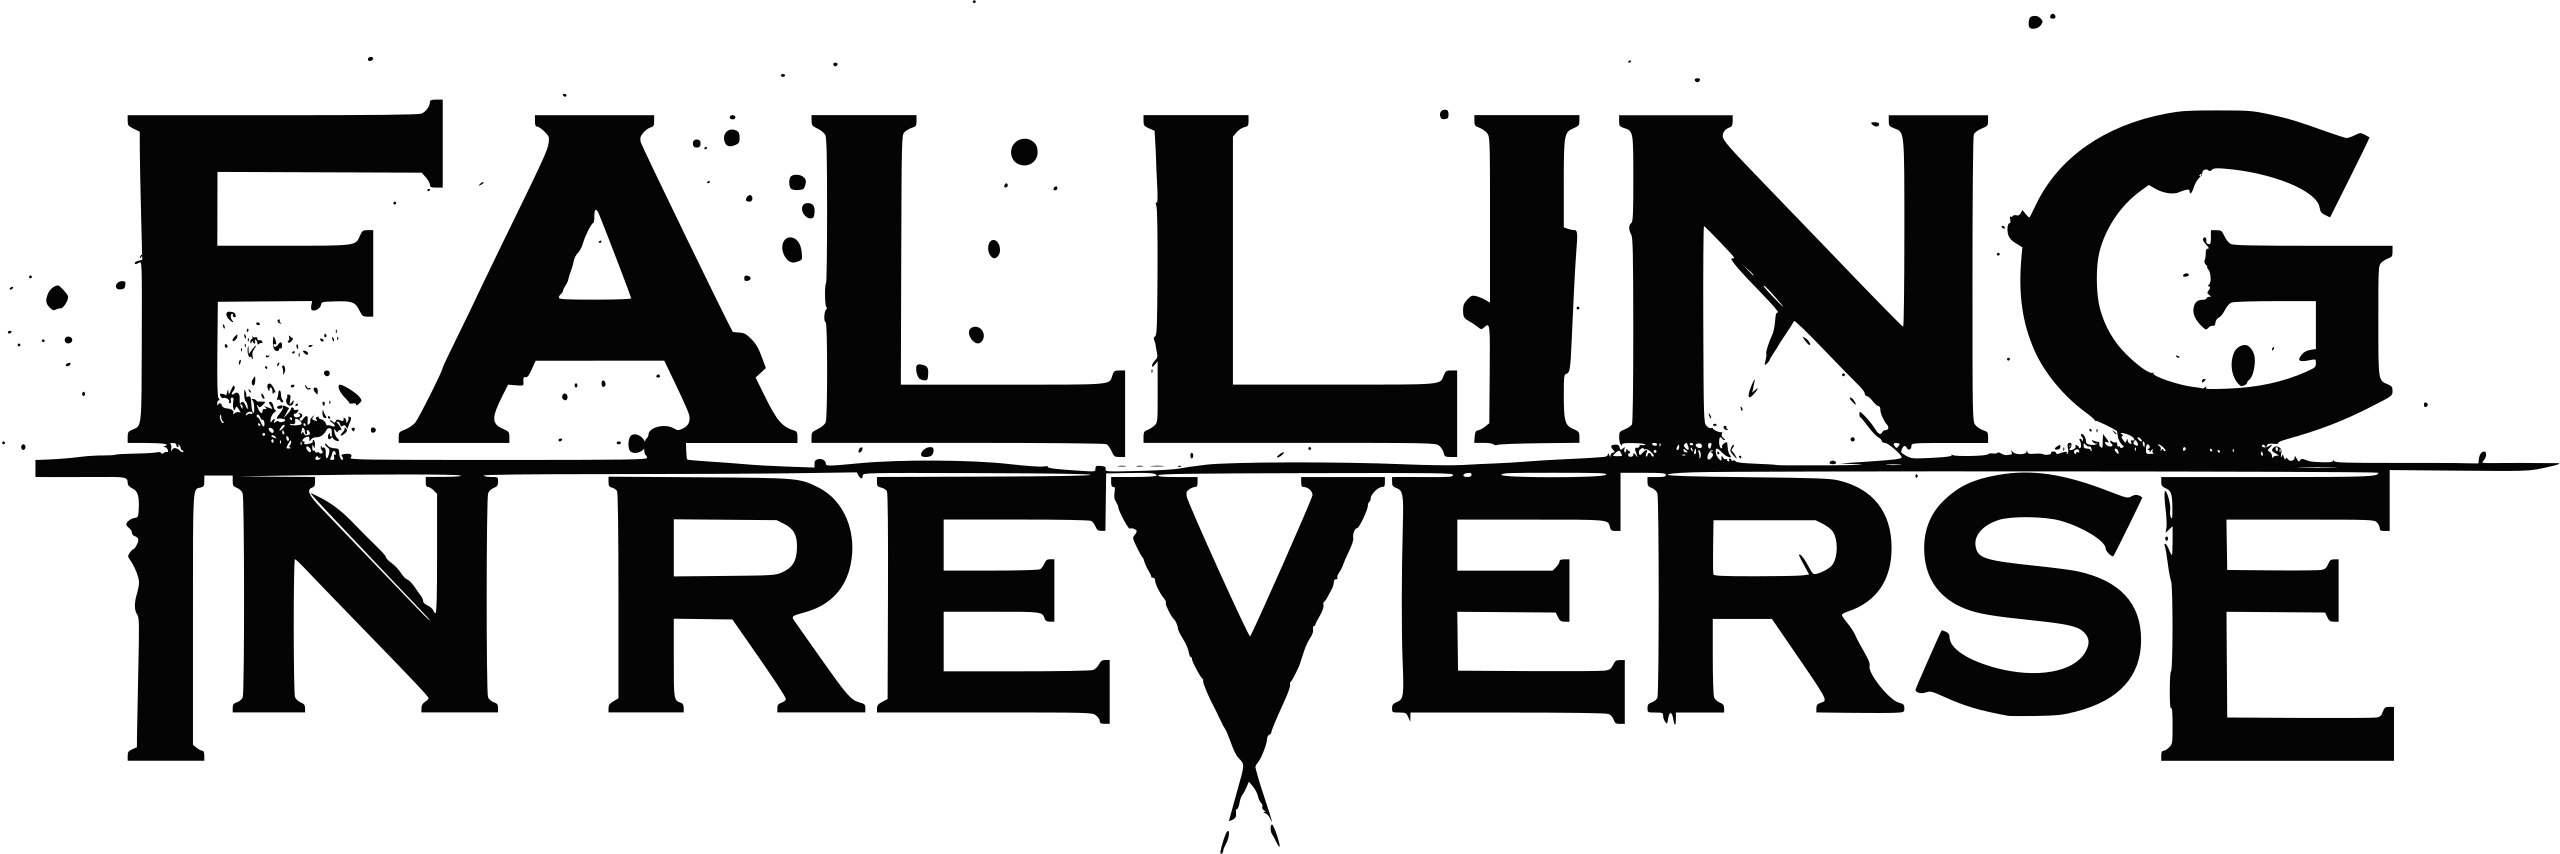 File:Falling in Reverse - Logo.svg - Wikimedia Commons